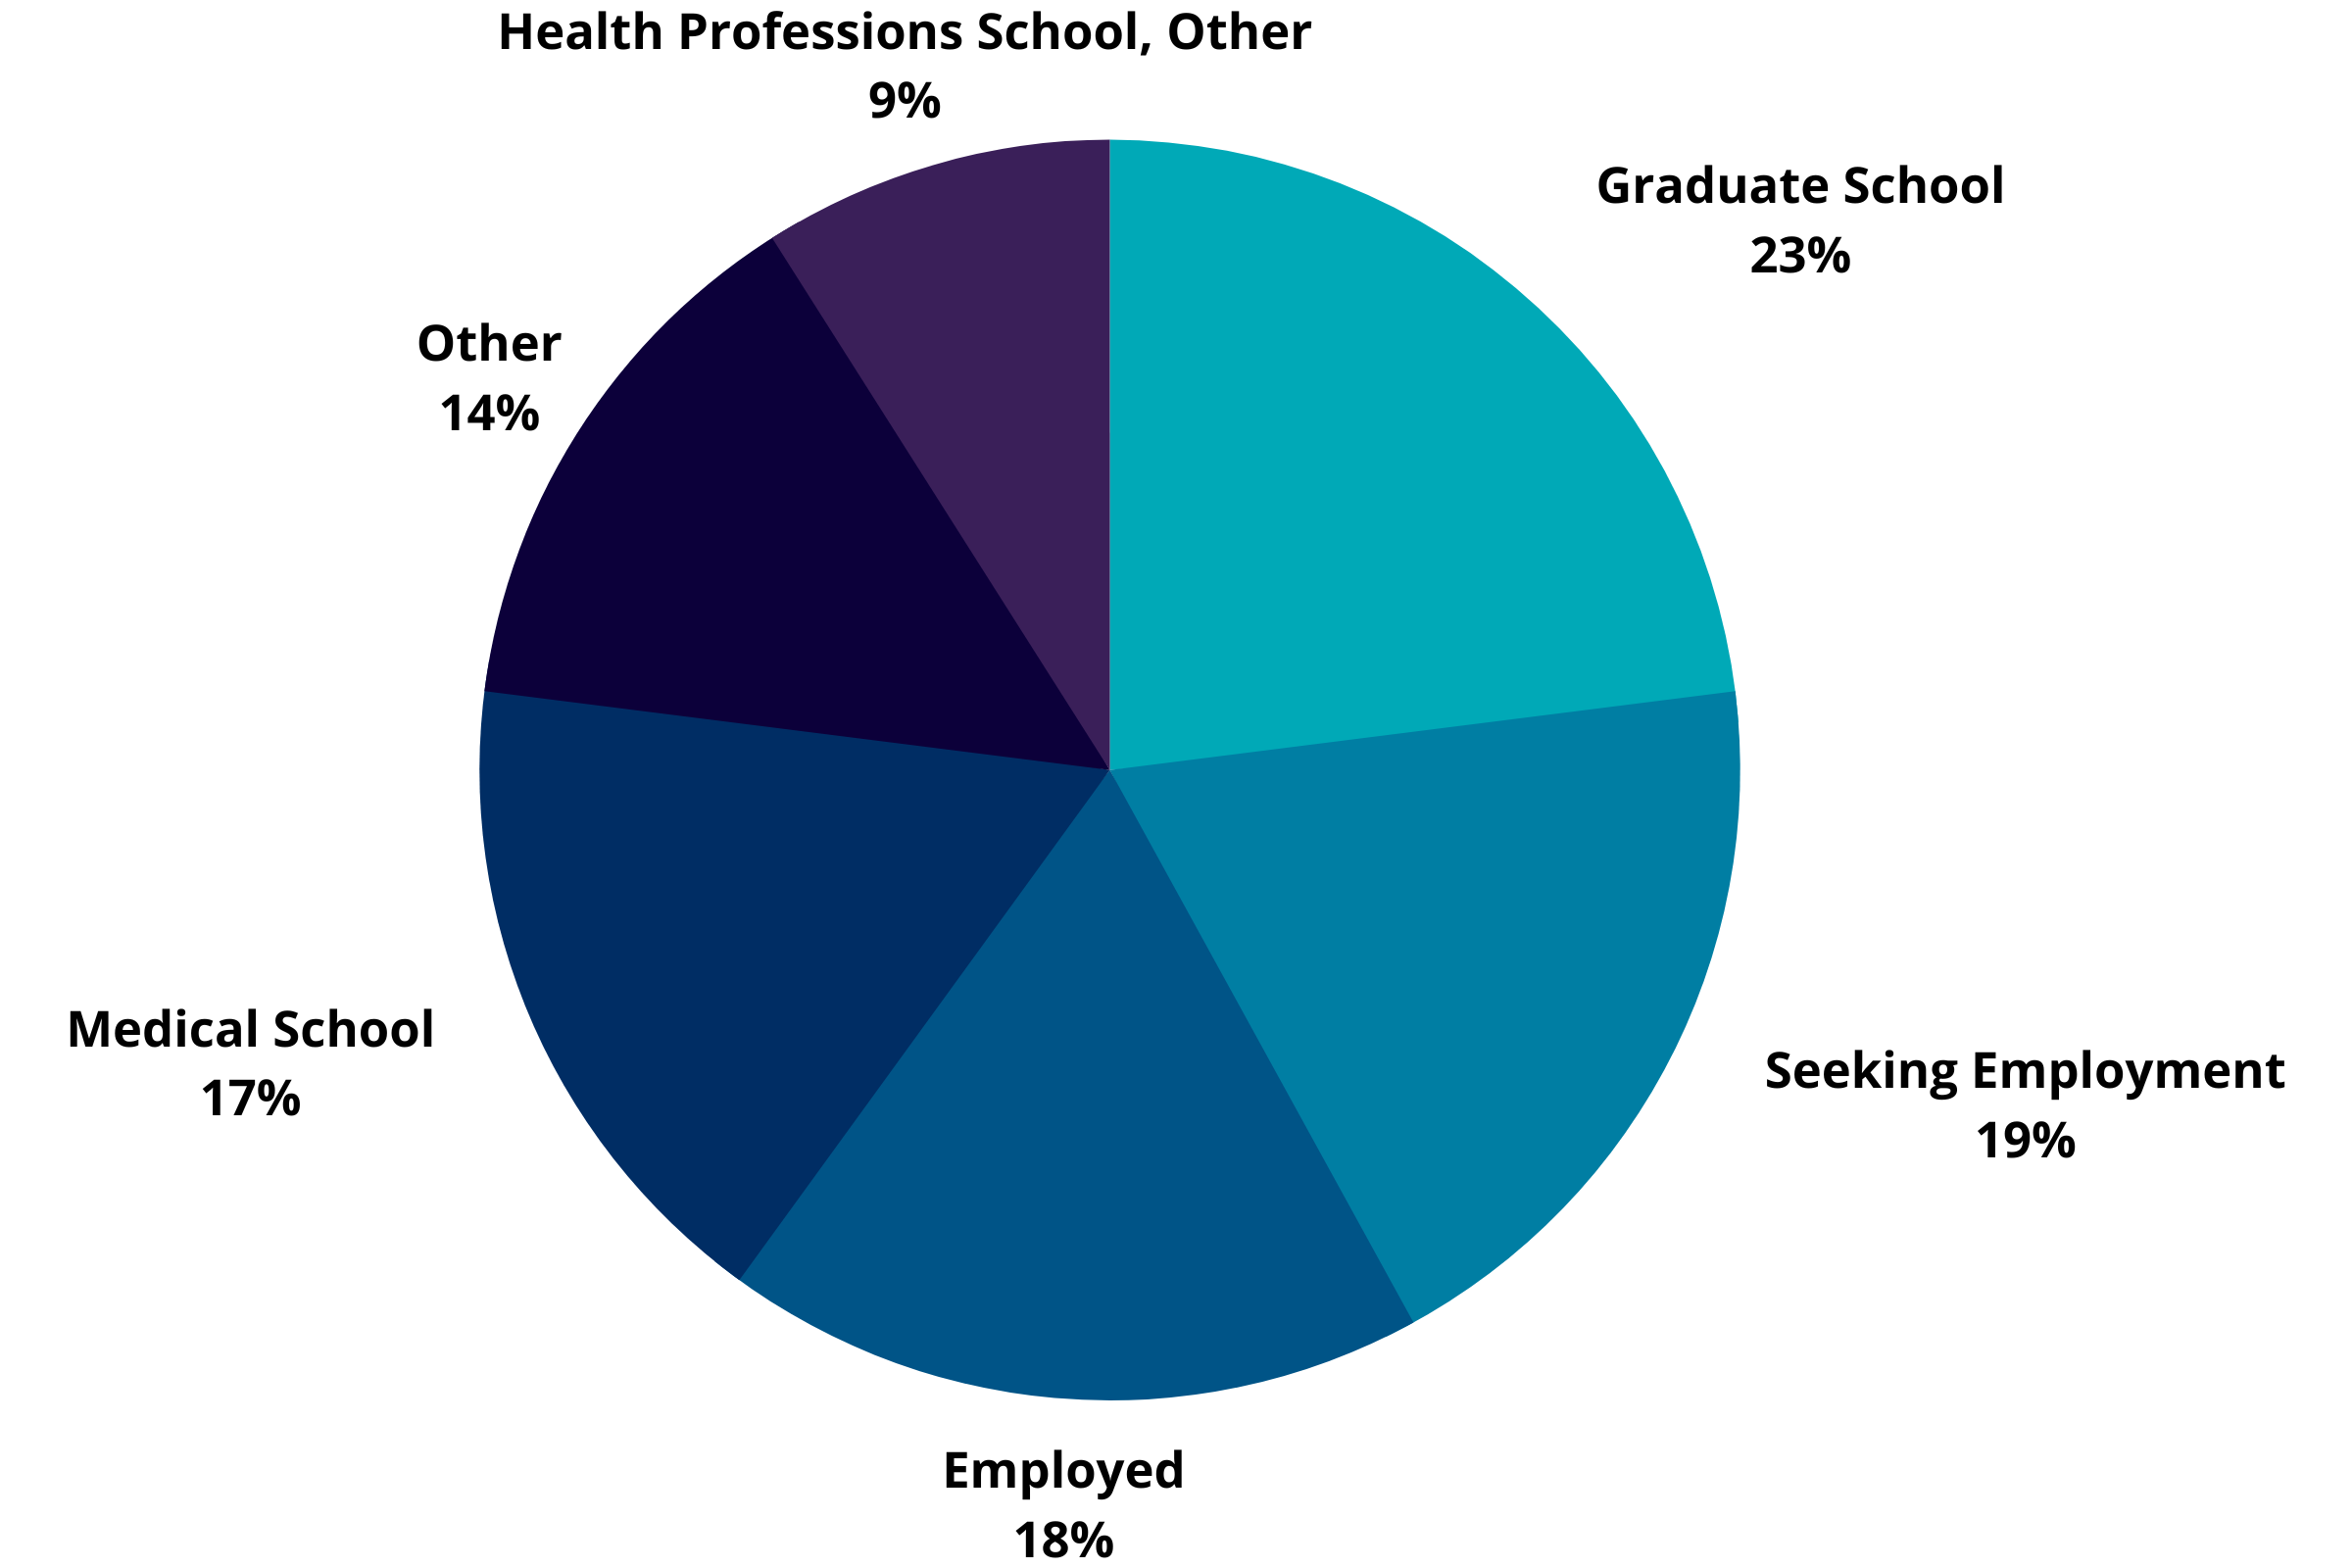 Public Health Graduation Outcomes: Graduate School 23%, Seeking Employment 19%, Employed 18%, Medical School 17%, Health Professions School 9%, Other 17%